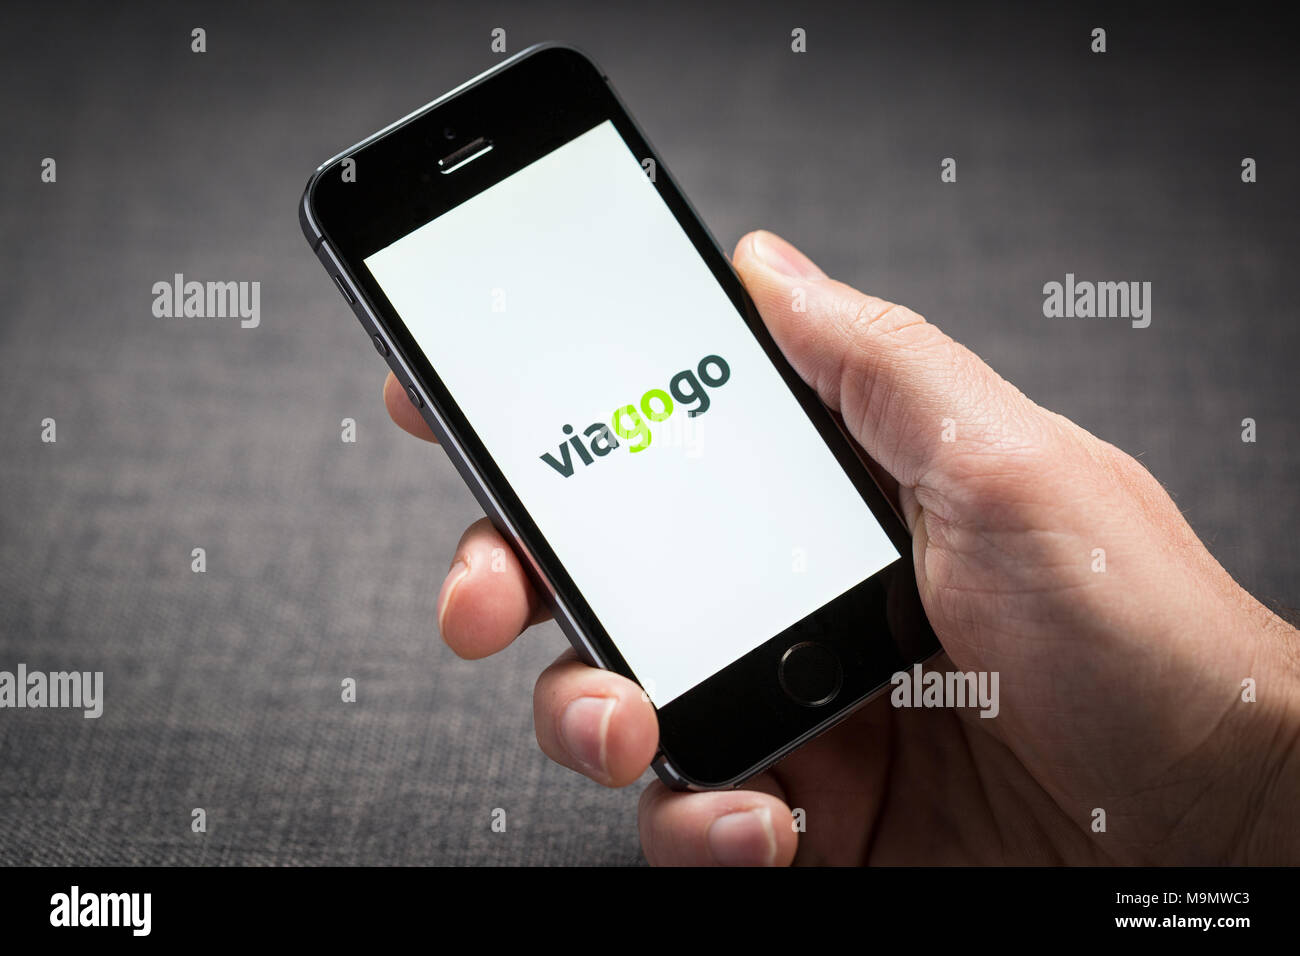 Viagogo tickets app on an iPhone Stock Photo